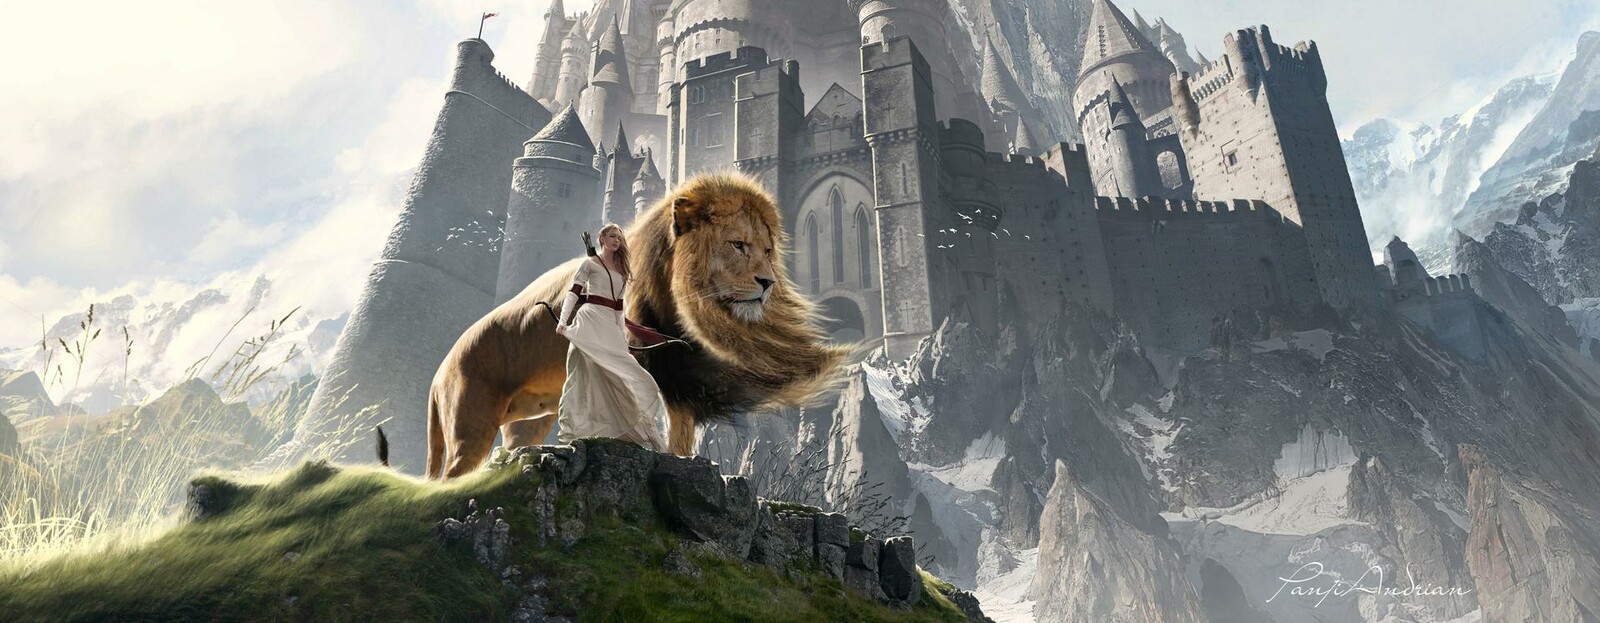 Aslan (Chronicles of Narnia)